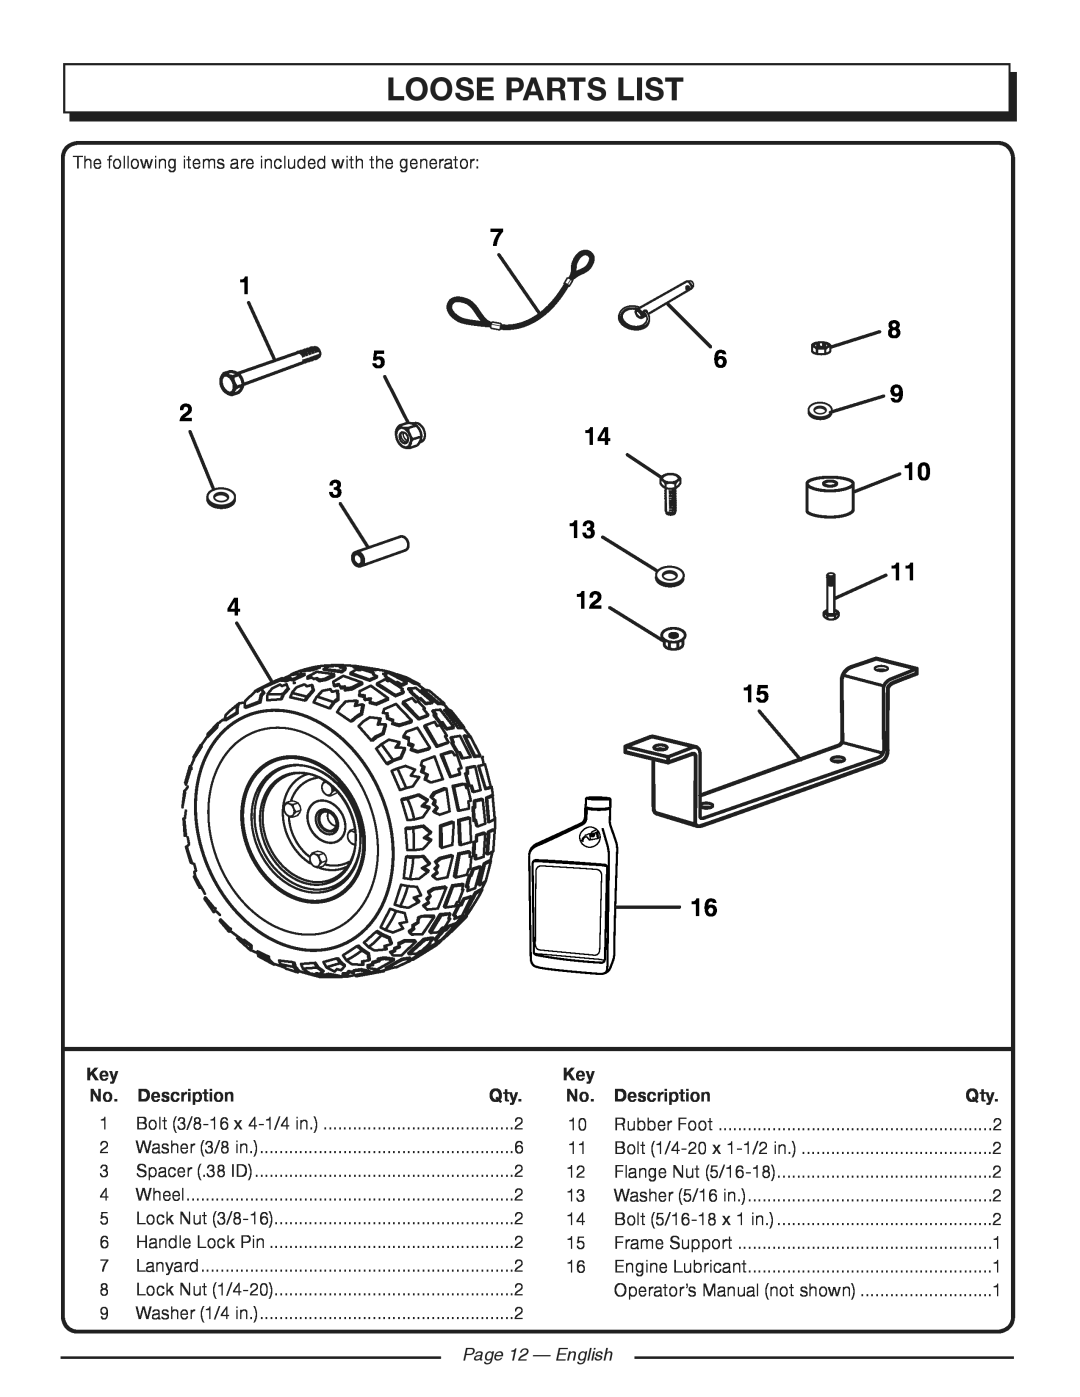 Homelite HG5700 manuel dutilisation loose parts list, Page 12 - English 